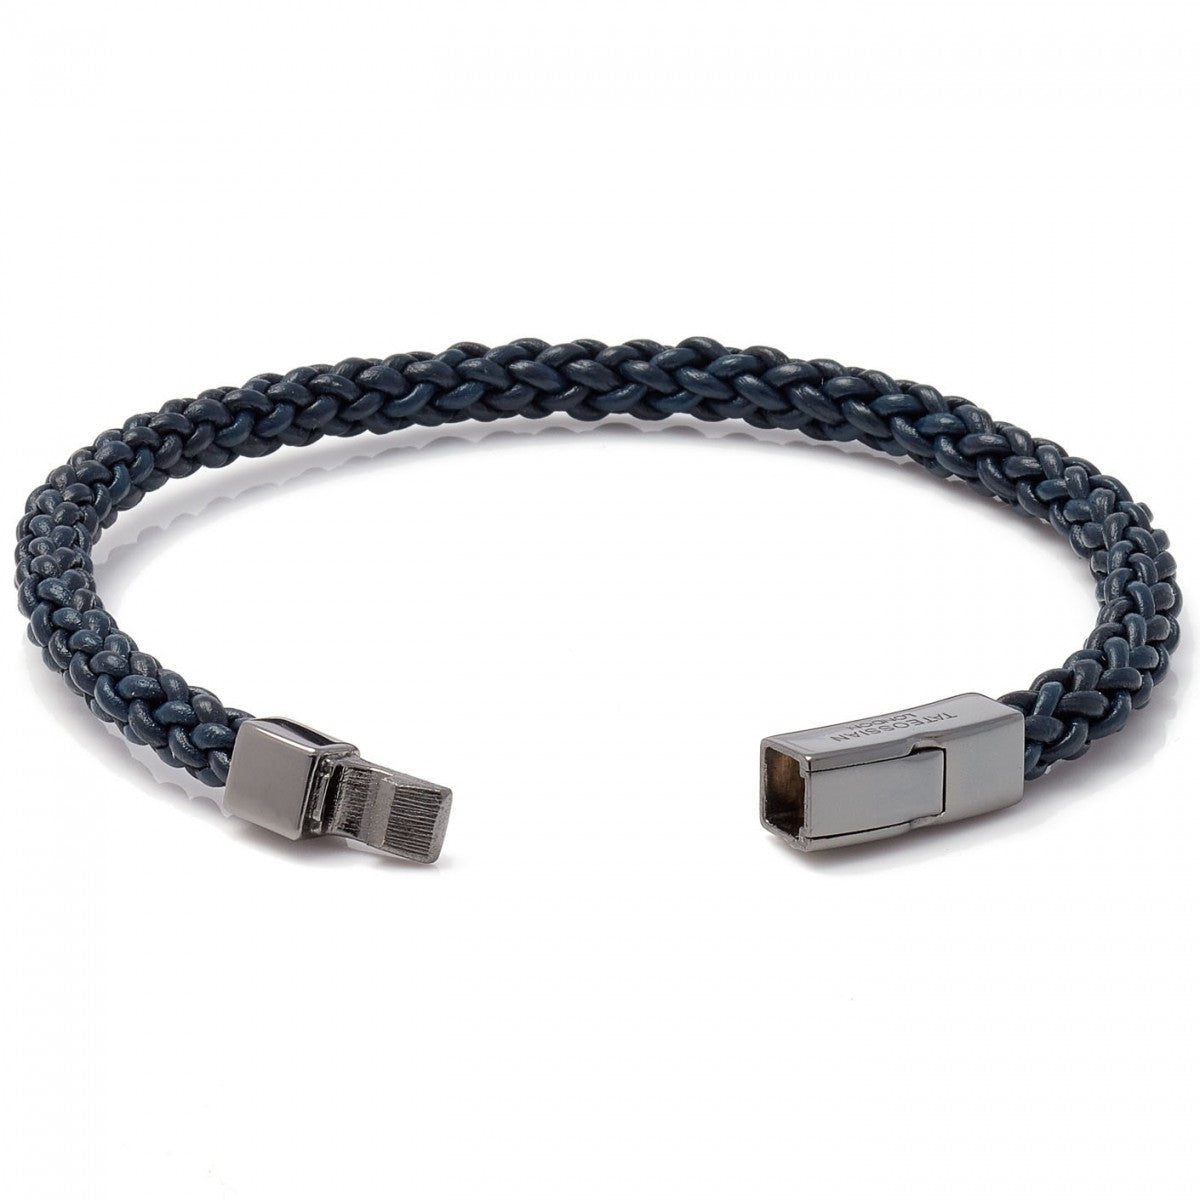 Tateossian Men's Click Trenza Leather Braided Bracelet, Navy